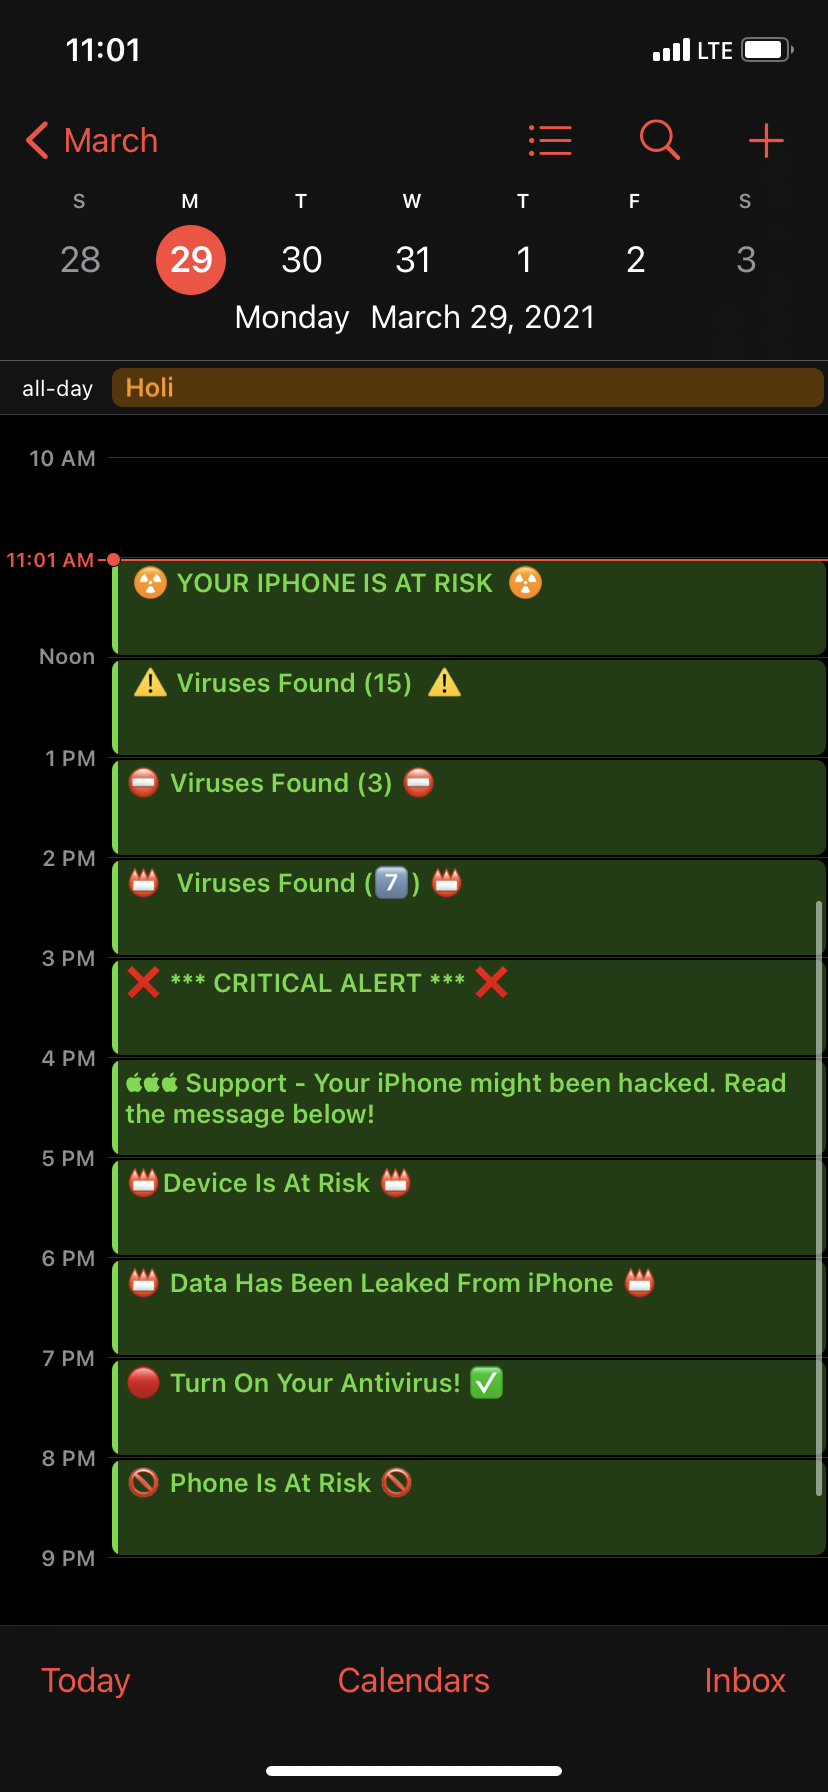 “Virus Found” added to my Apple calendar Apple Community